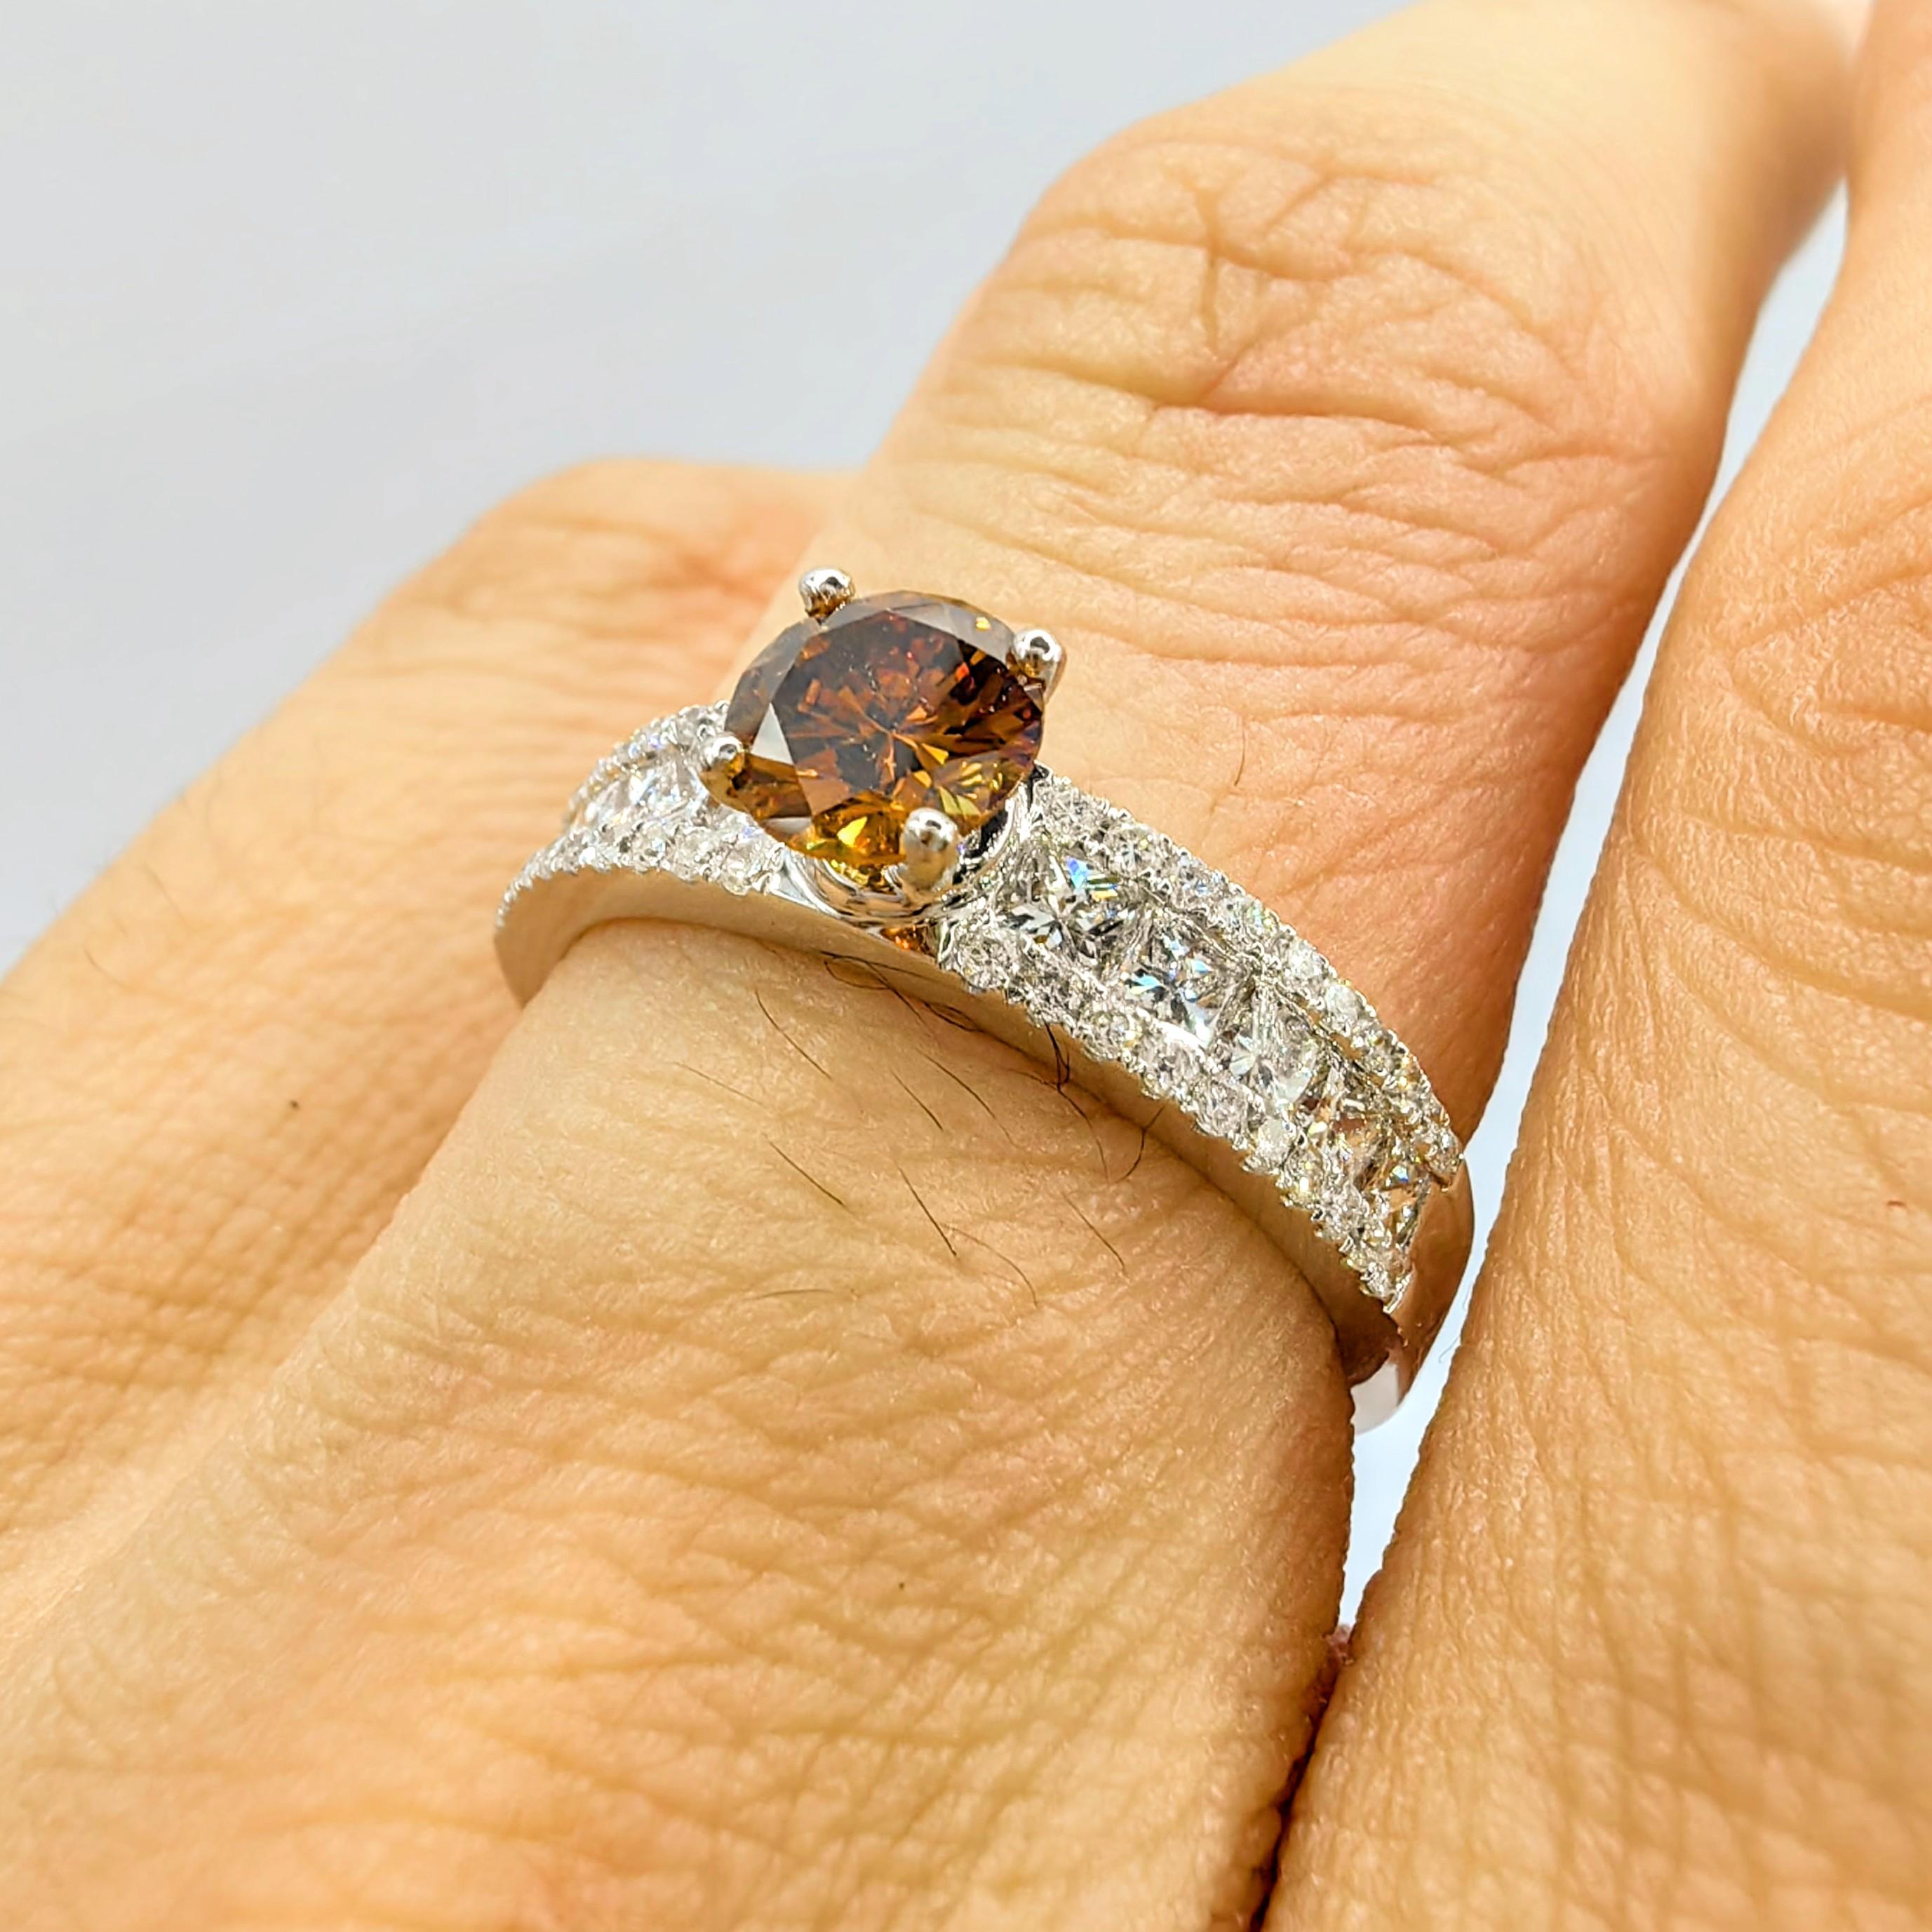 Women's GIA Certified .51 Carat Fancy Deep Orange-Brown Diamond Ring in 18K White Gold For Sale